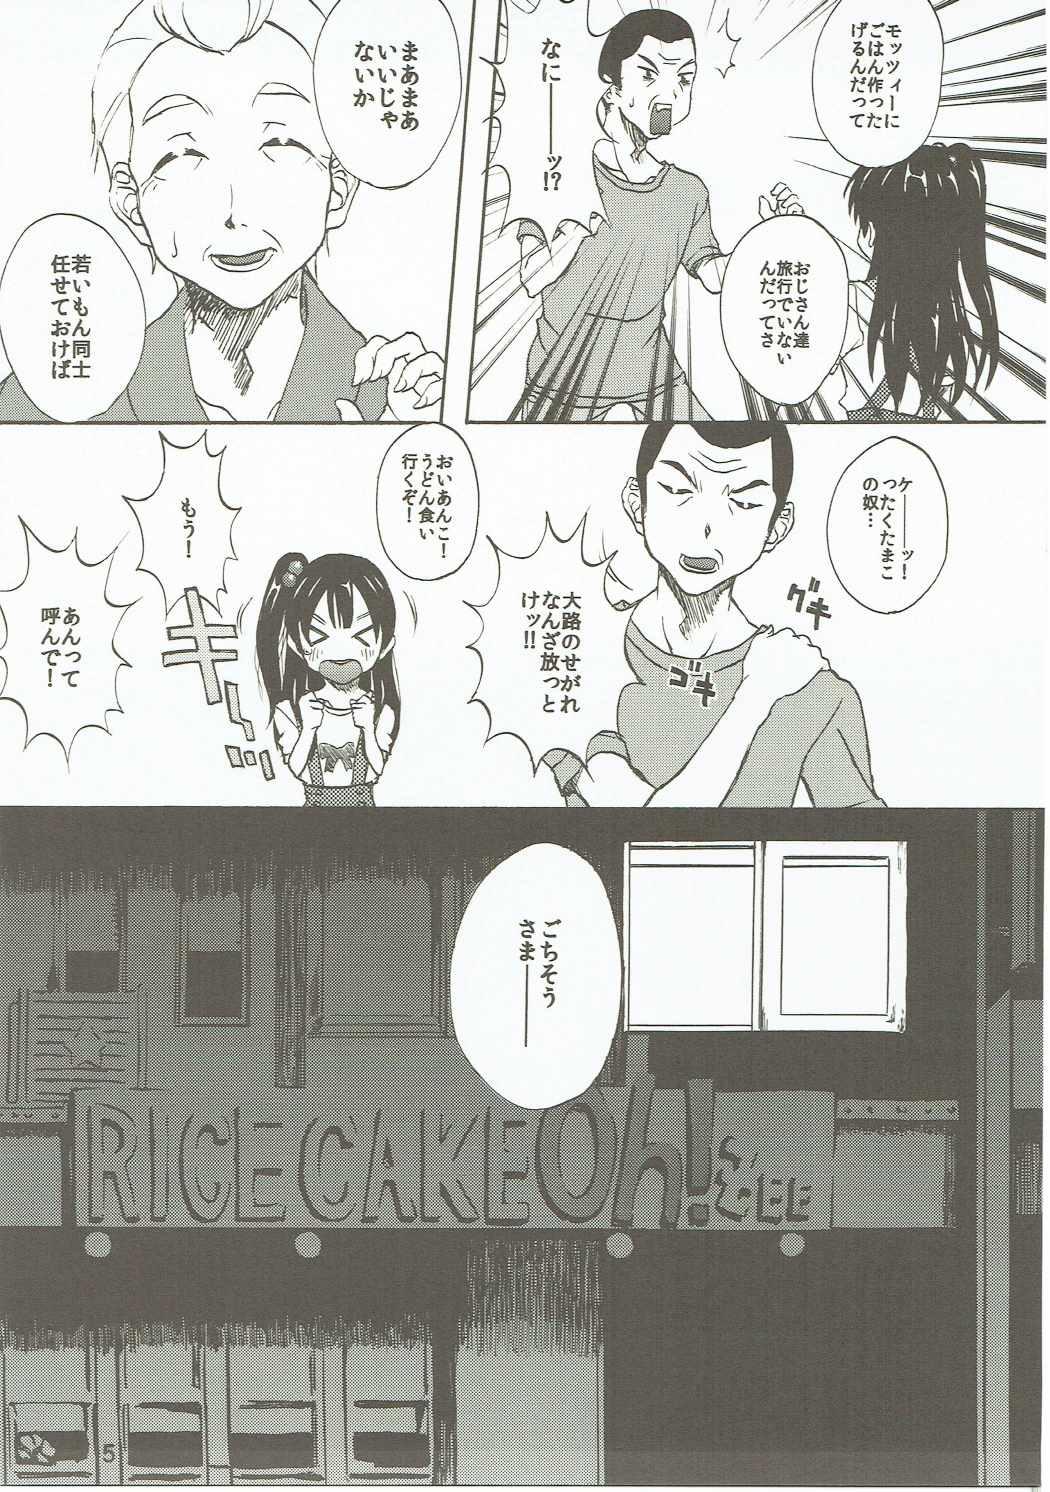 Housewife Komata no Kireagatta Ii Tamako. - Tamako market Sofa - Page 4